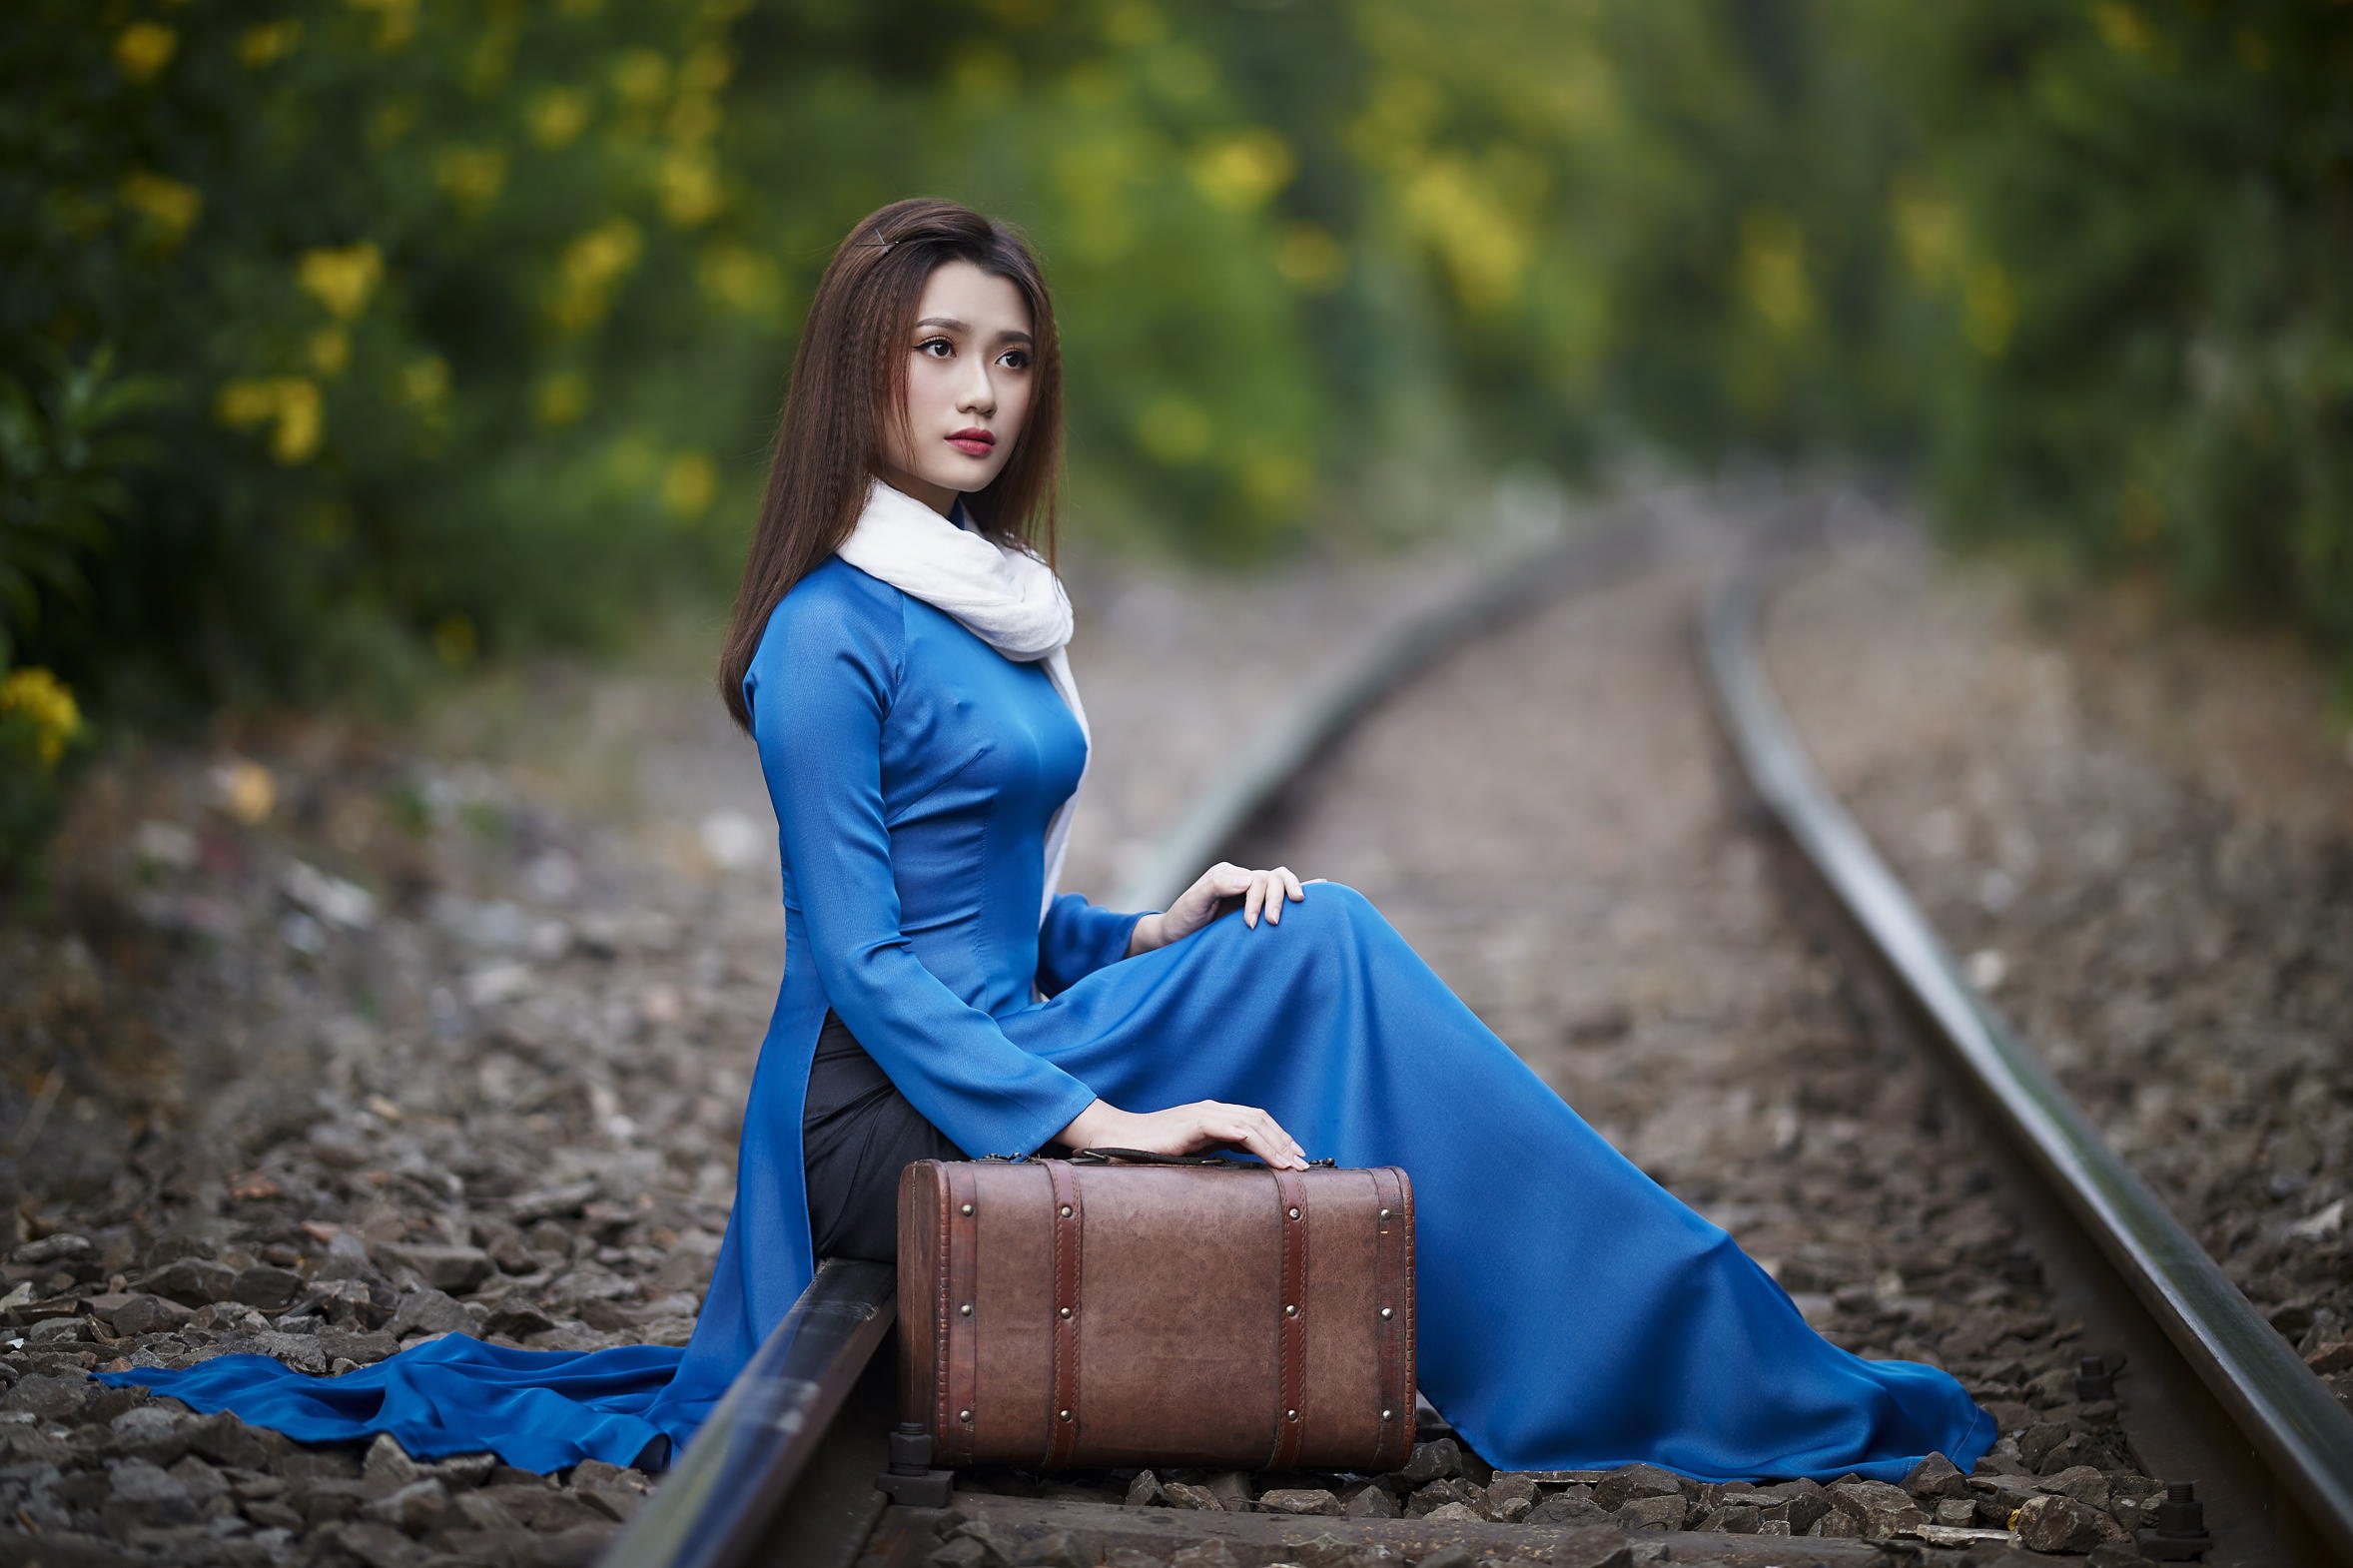 People 2356x1570 Asian model women long hair dark hair depth of field women outdoors sitting railway suitcase blue dress white scarf hairpins